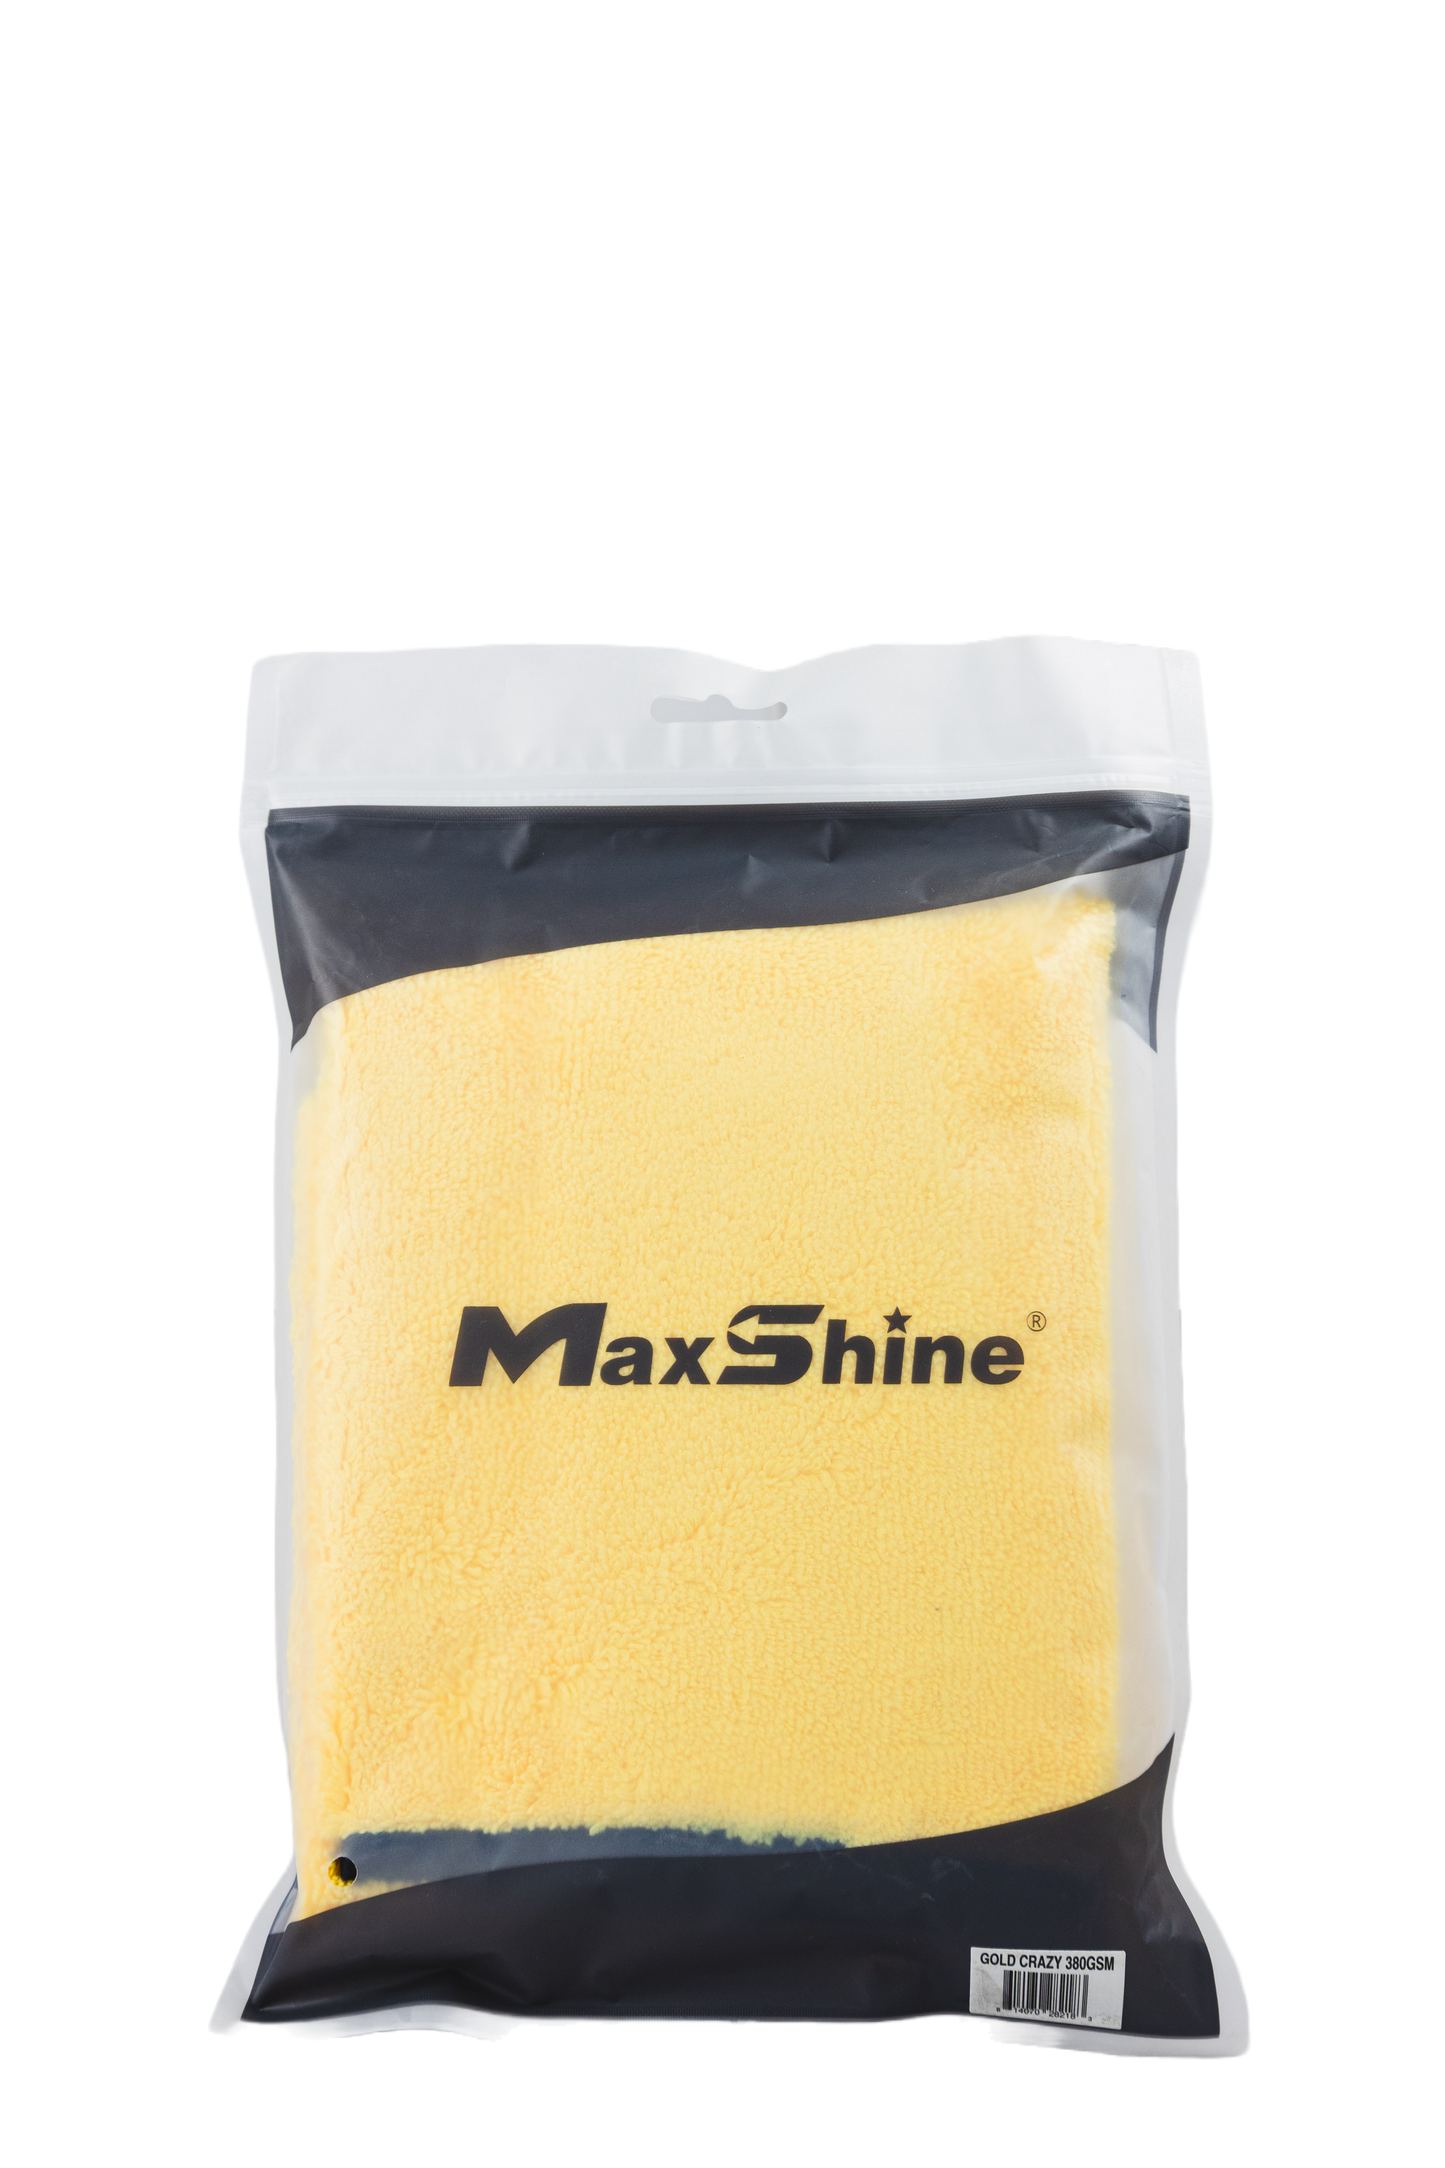 Maxshine Gold Crazy Microfiber Towel